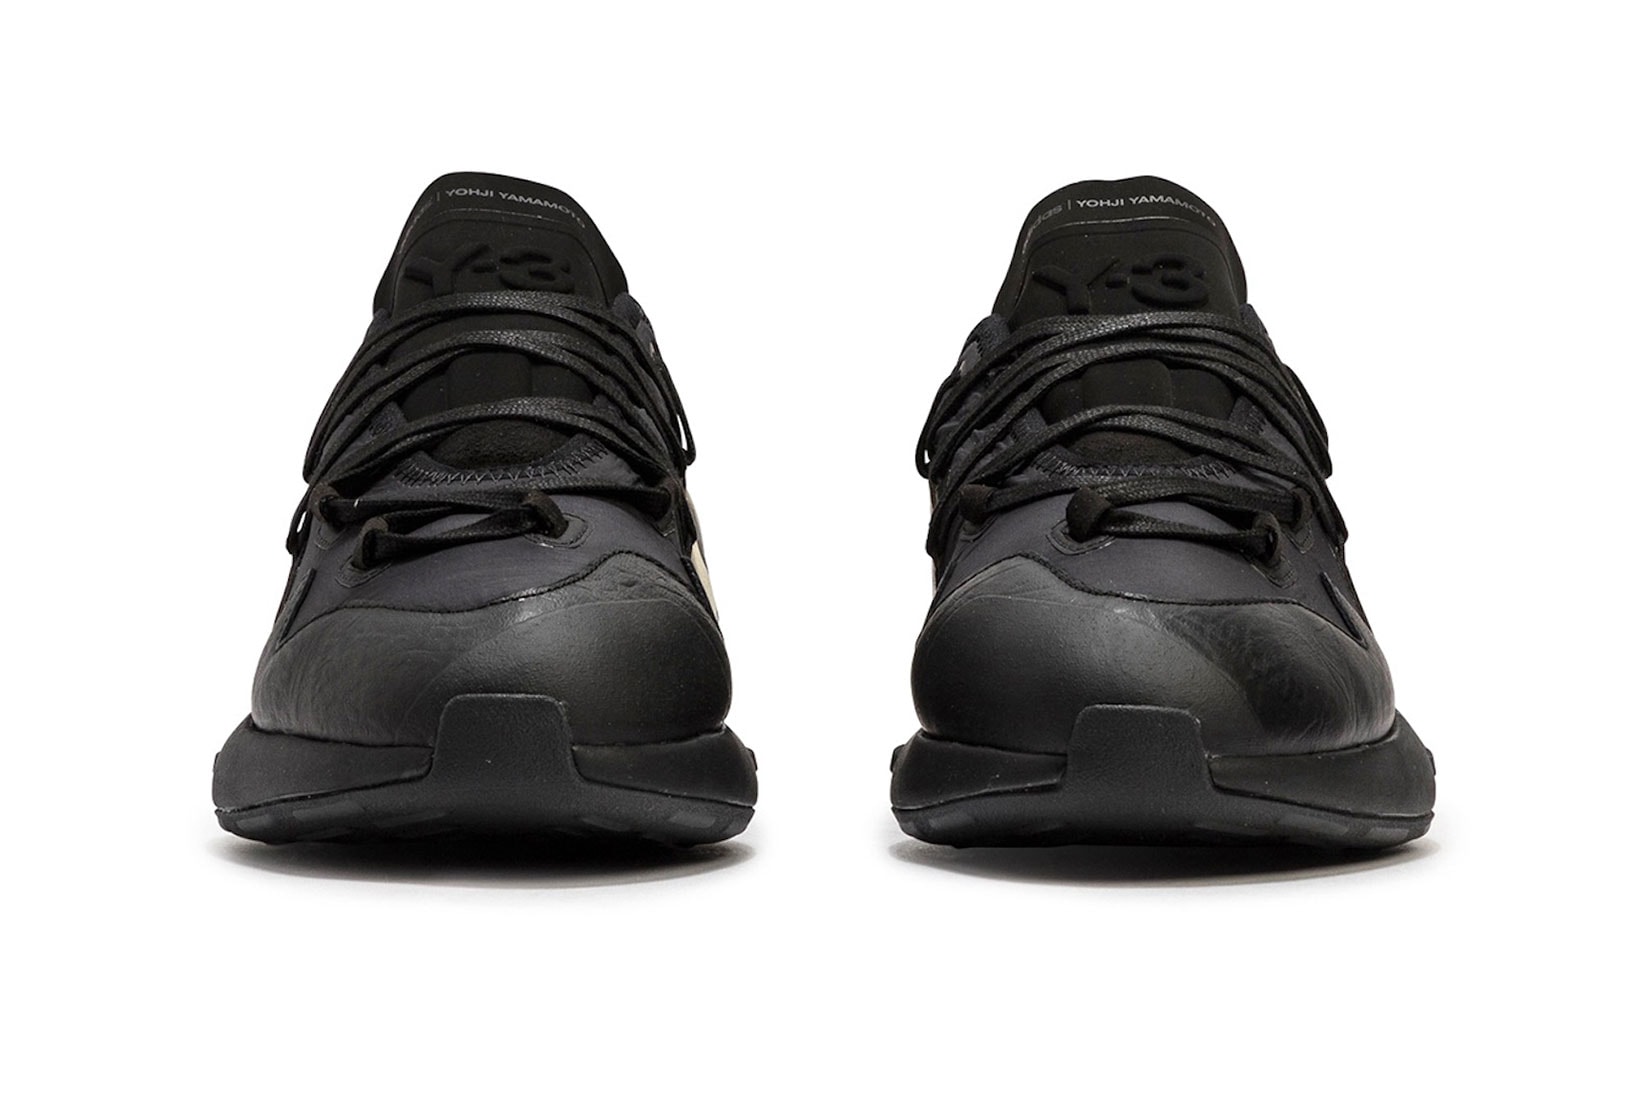 adidas Y-3 IDOSO BOOST Sneakers Footwear Shoes Black Cream Front